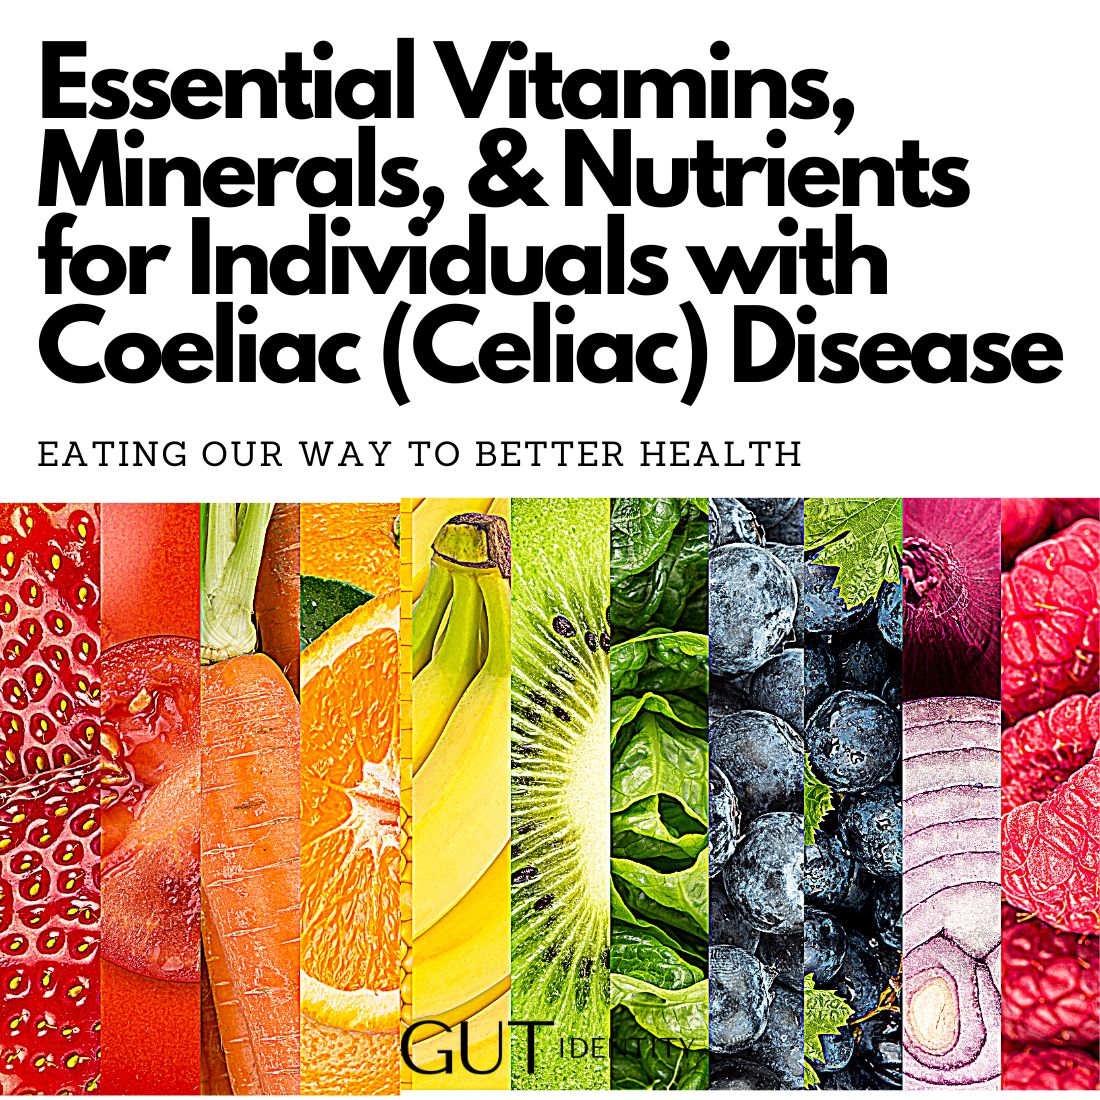 Essential Vitamins, Minerals, & Nutrients for Coeliac Disease by Gutidentity